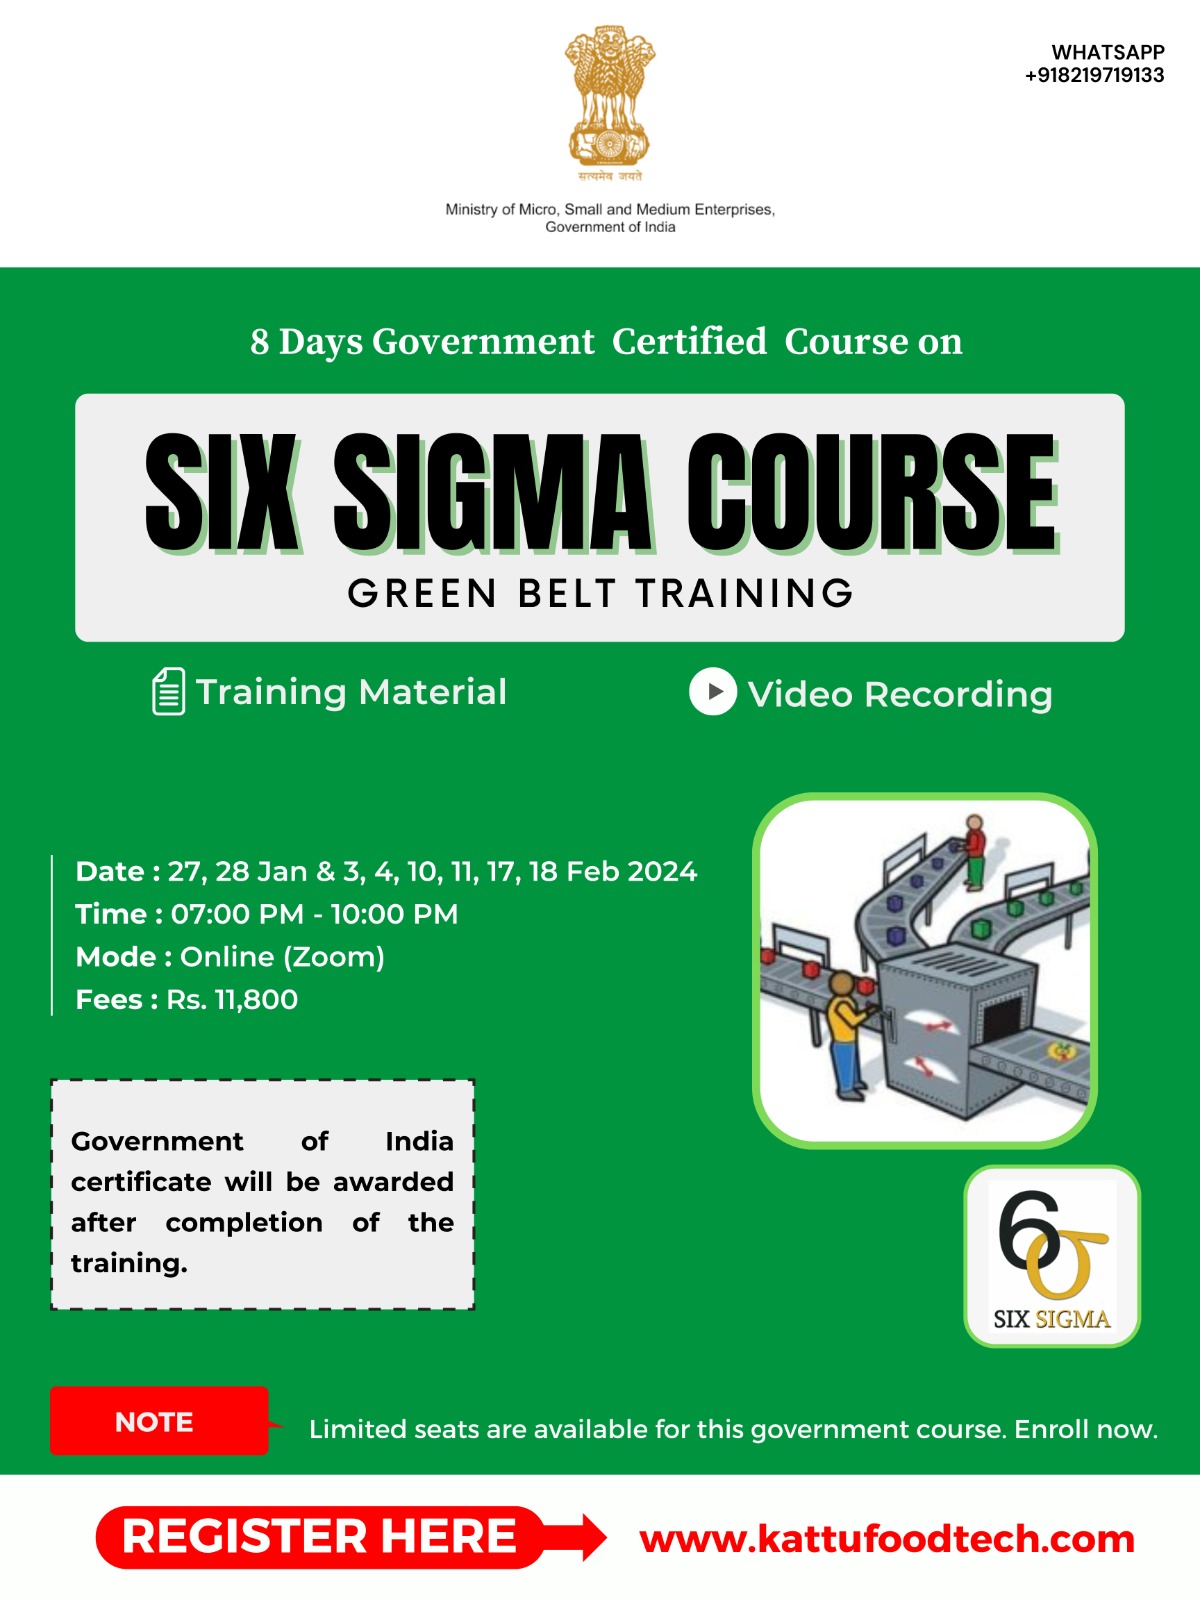 Six Sigma Green Belt Training by MSME, Govt of India | KATTUFOODTECH